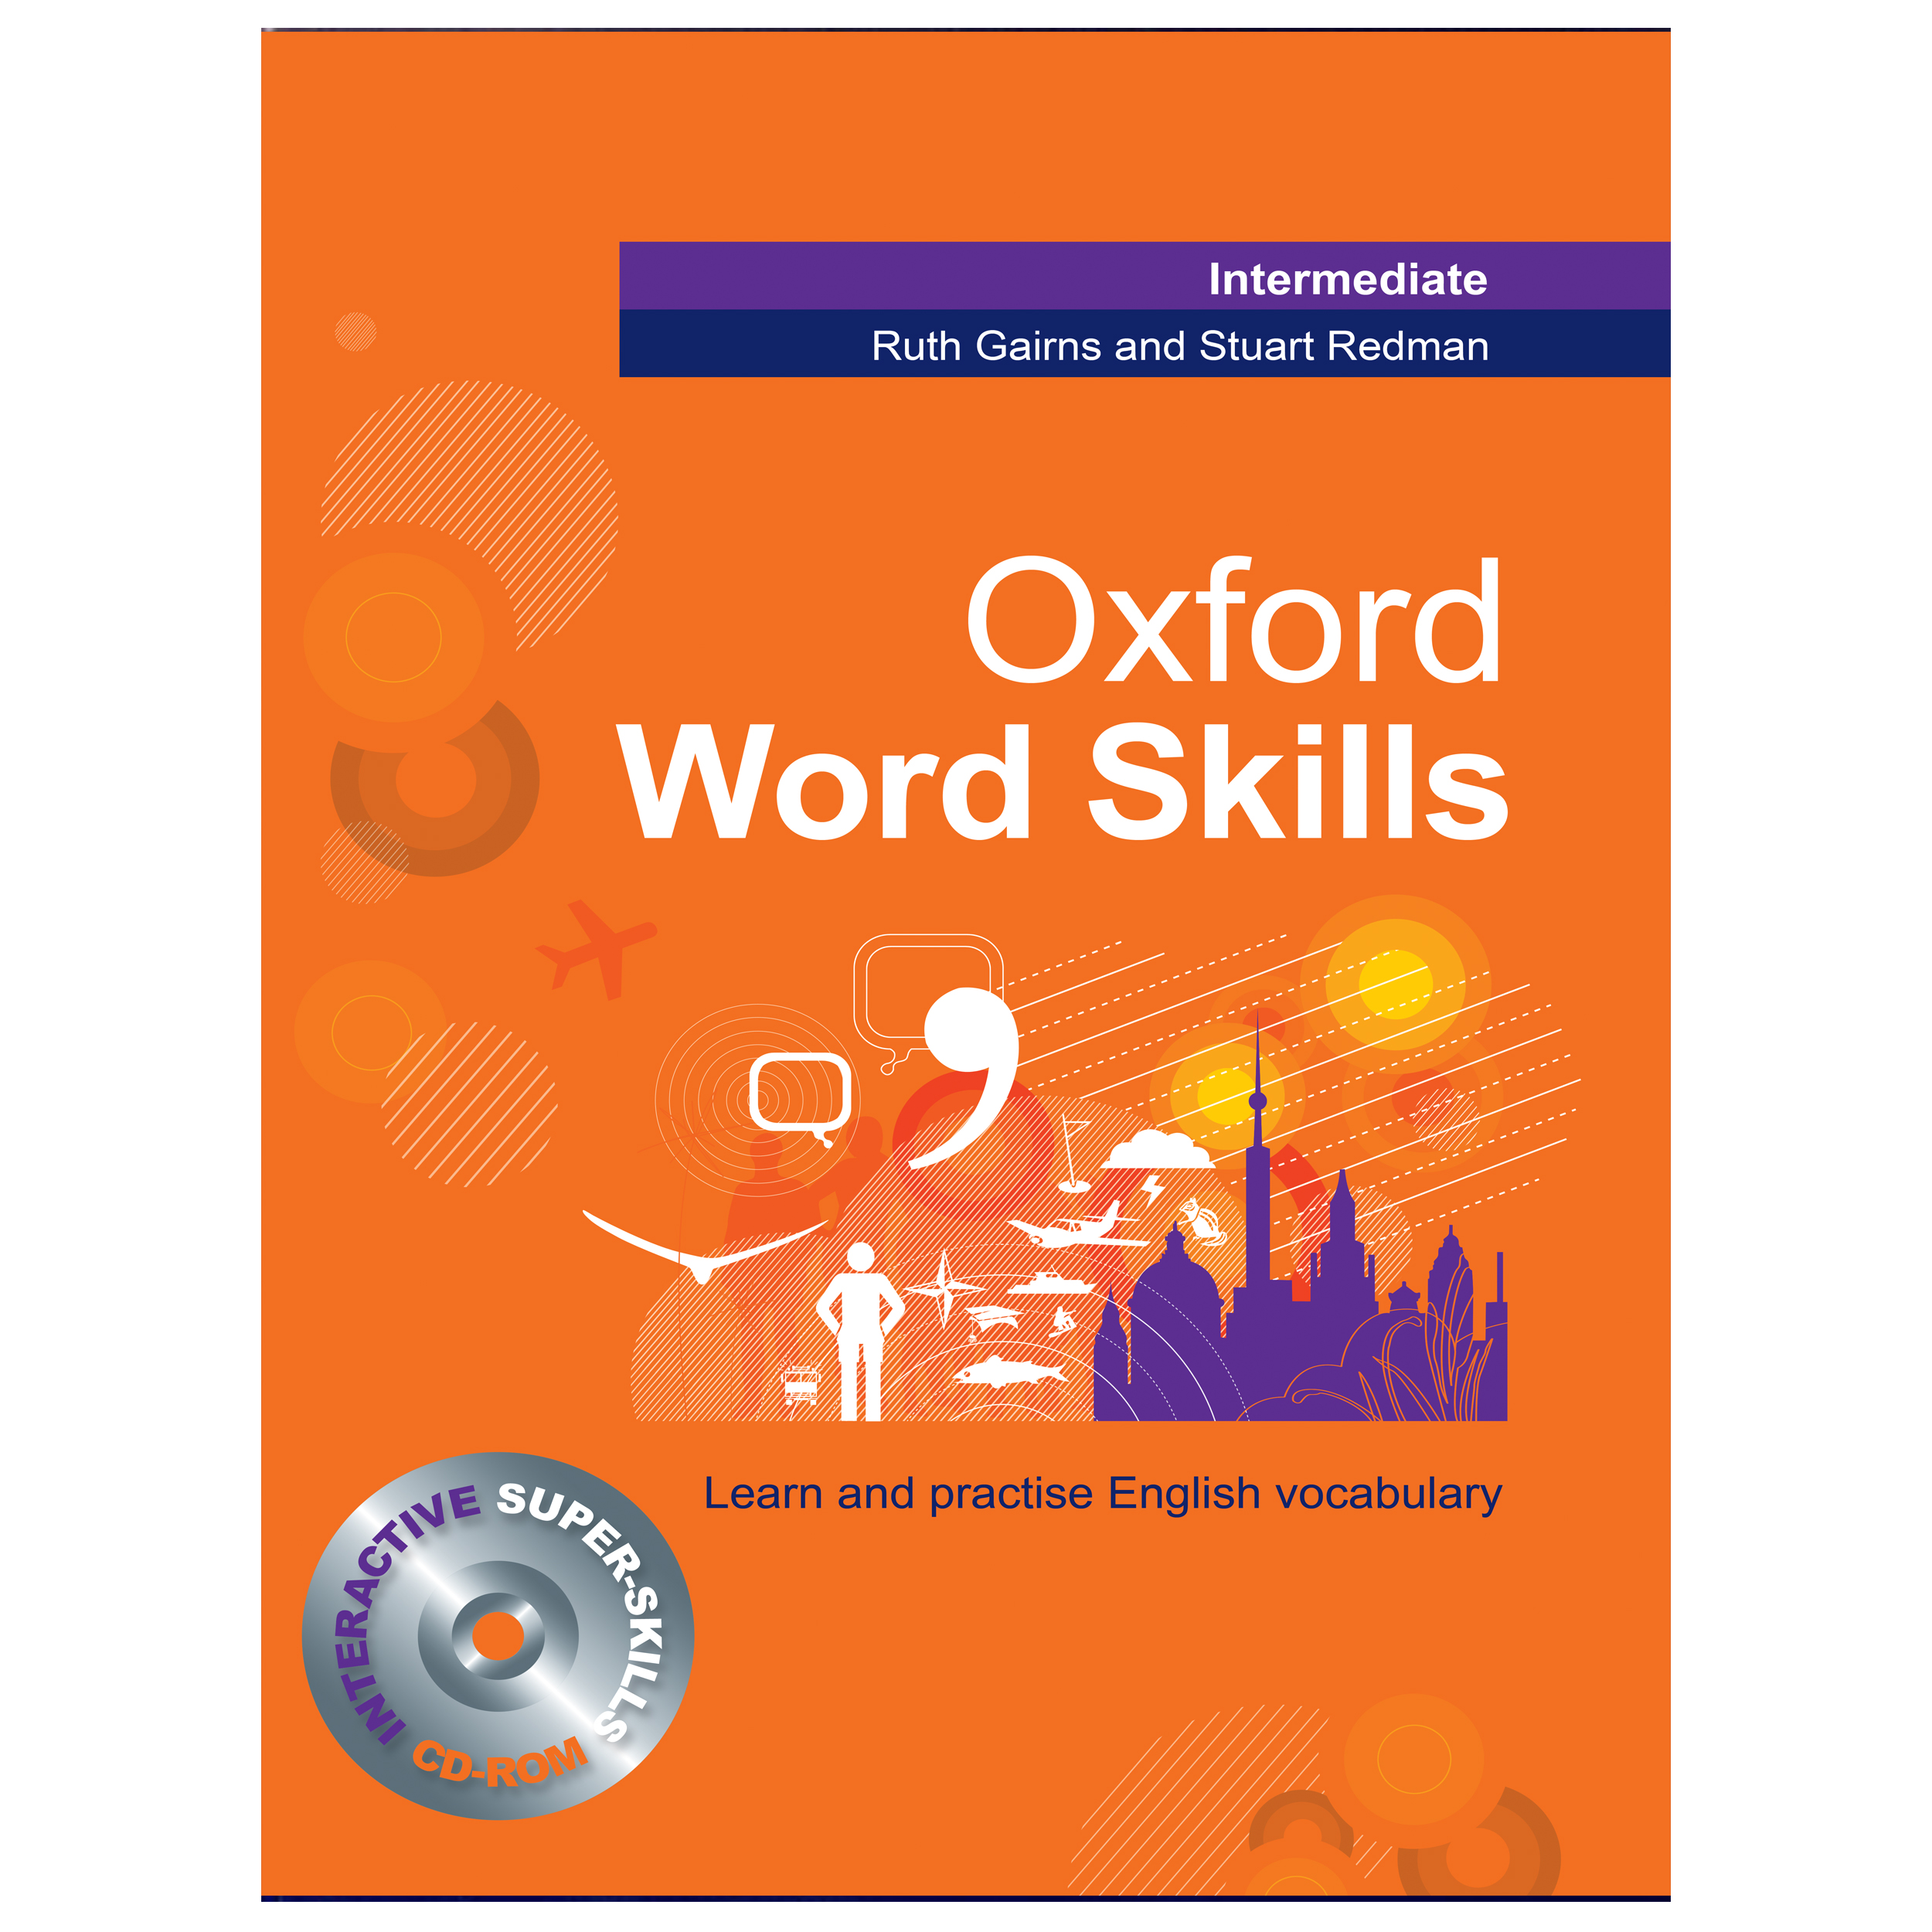 کتاب Oxford Word Skills Intermediate اثر Ruth Gairns and Stuart Redman انتشارات هدف نوین